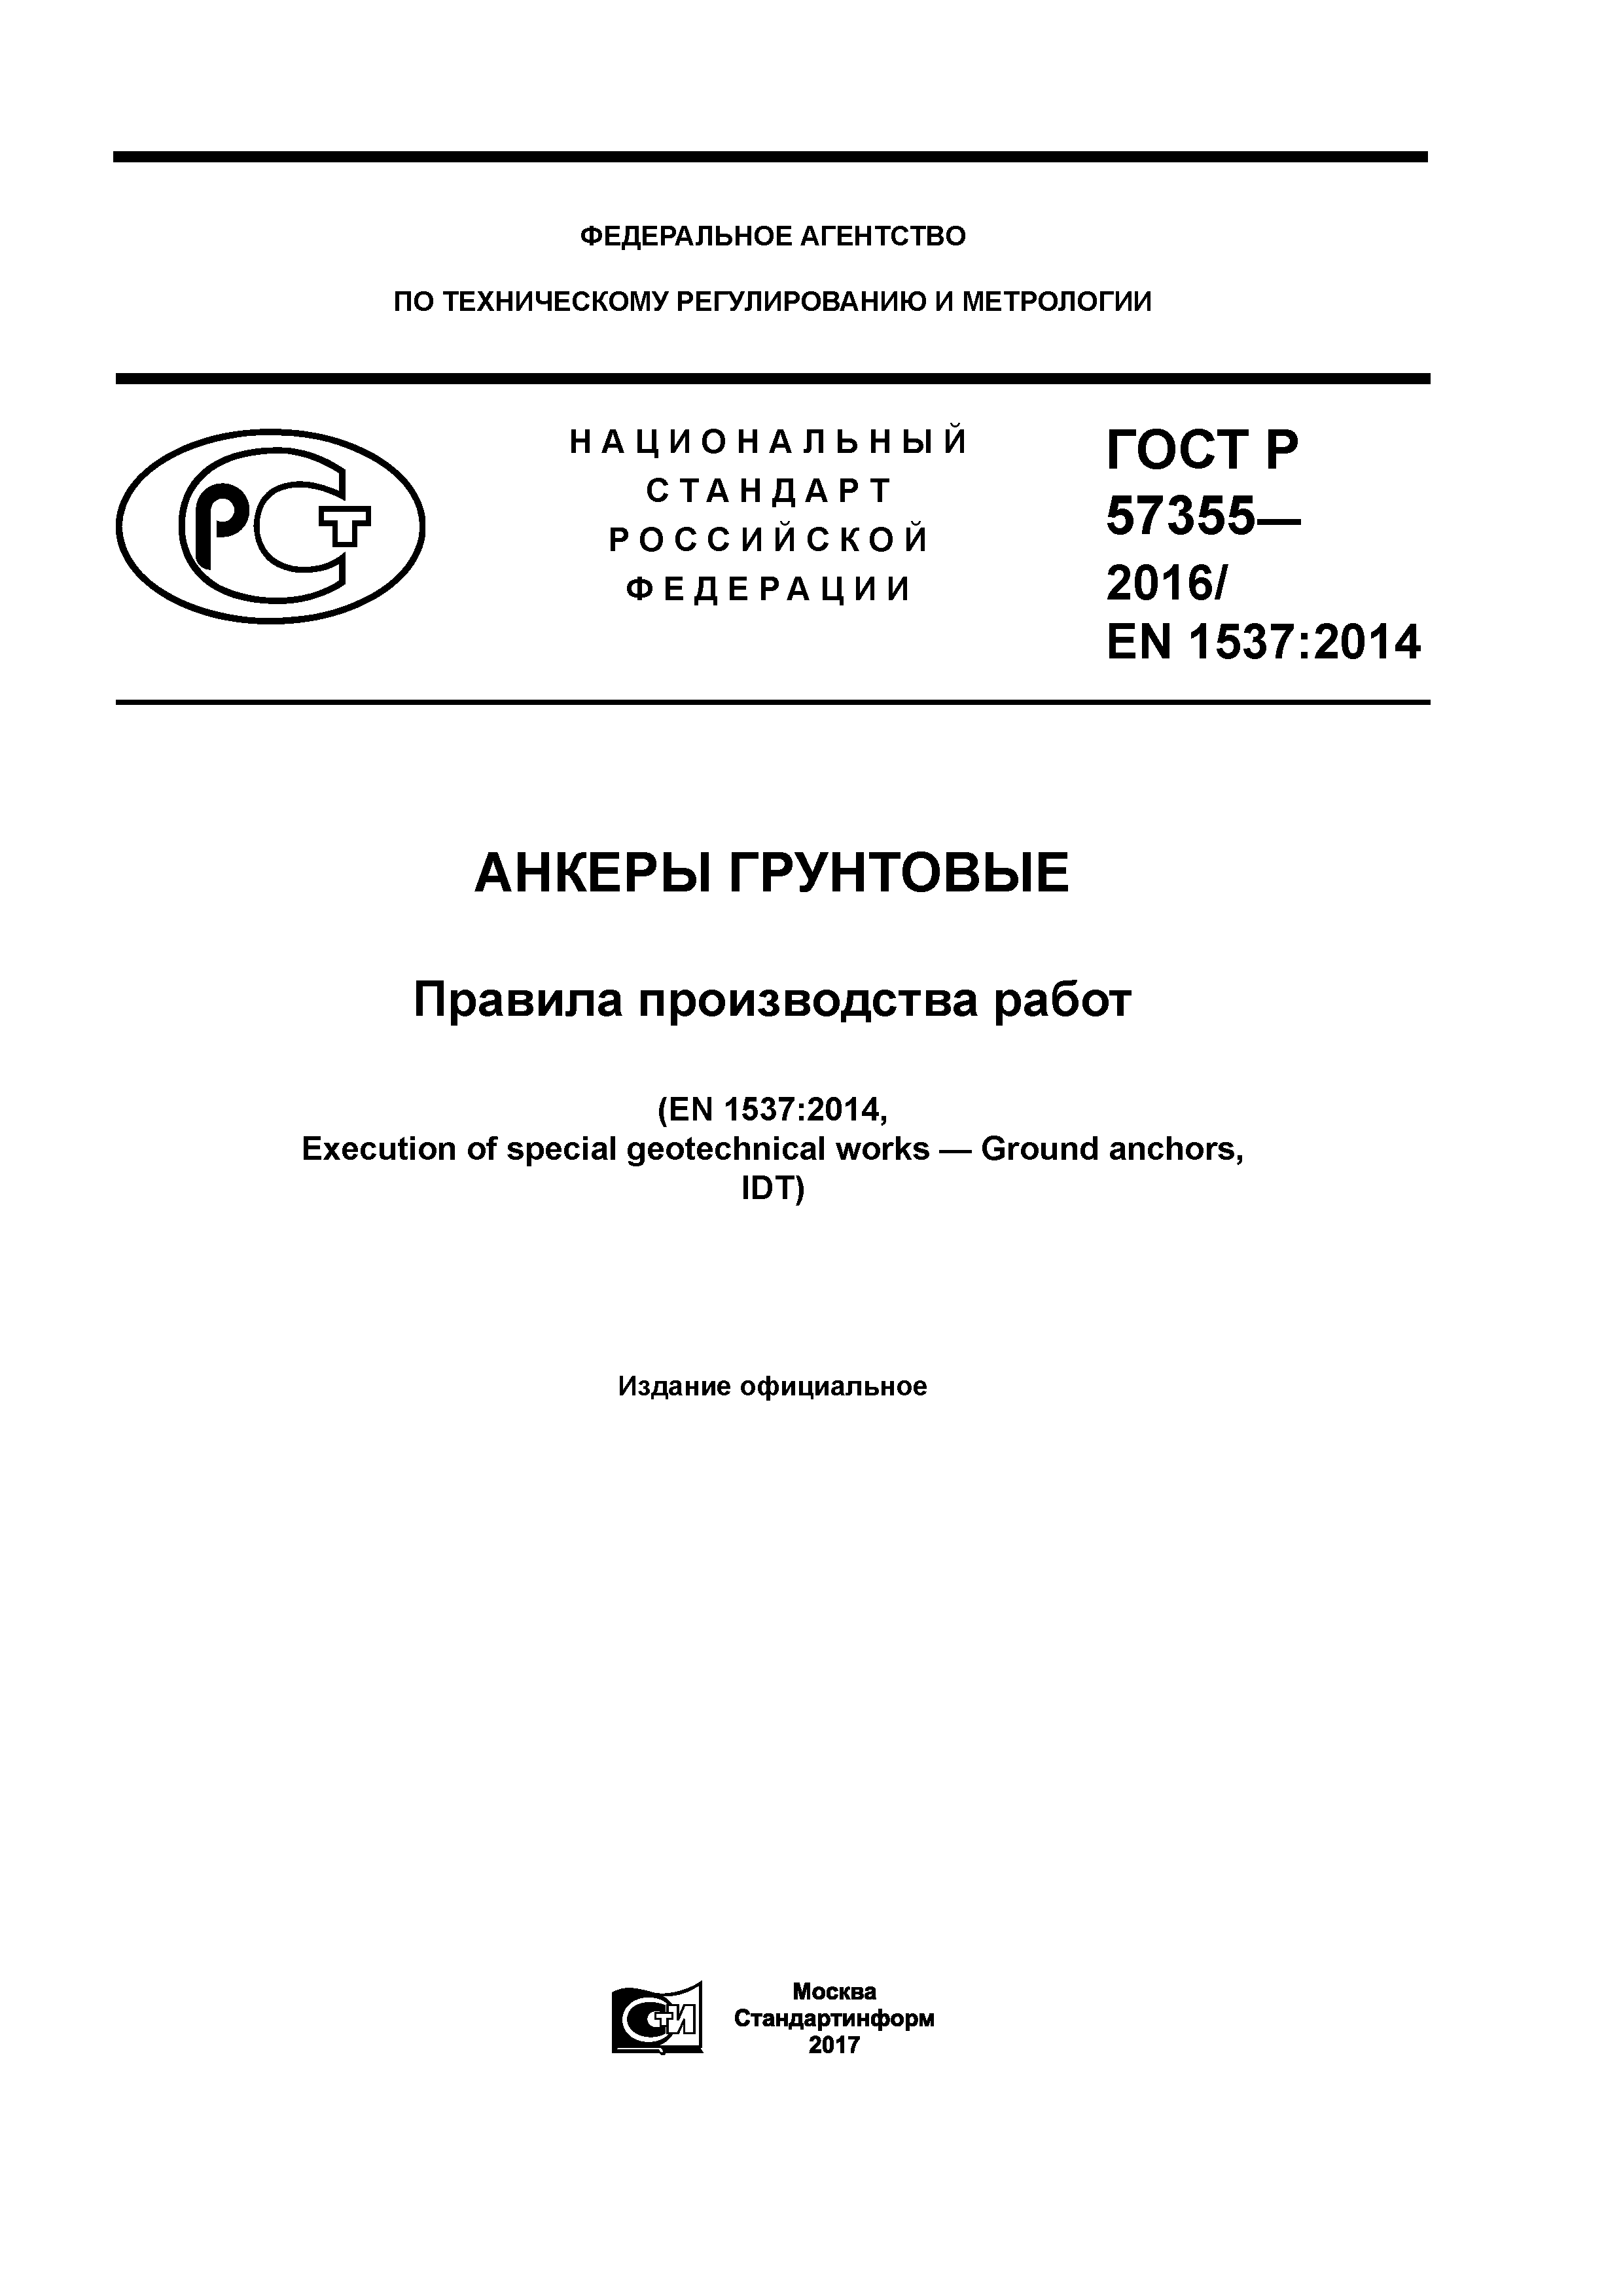 ГОСТ Р 57355-2016